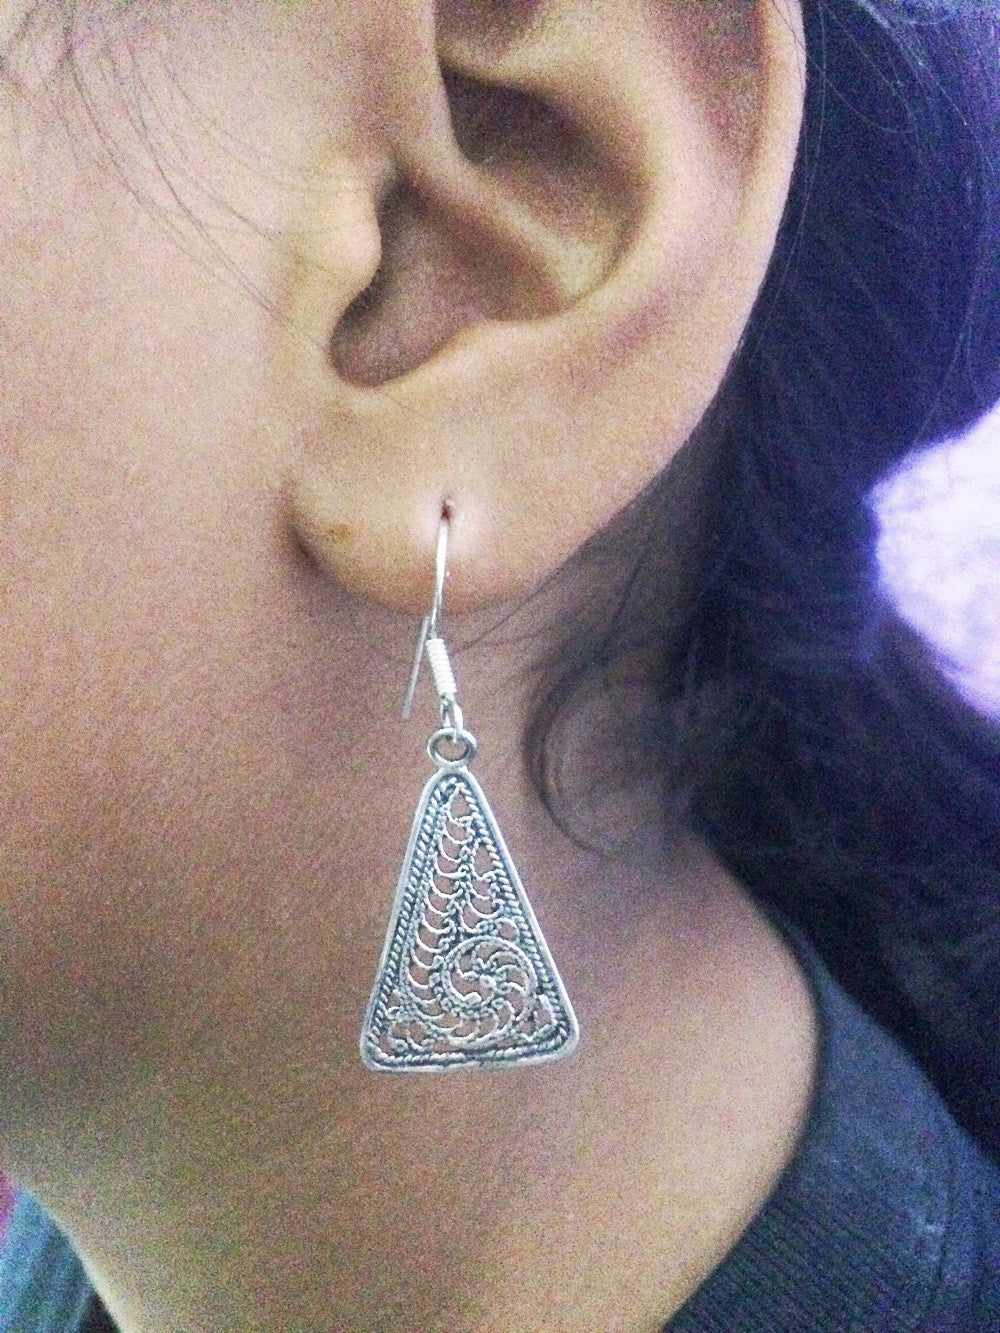 Silver oxidised earrings       